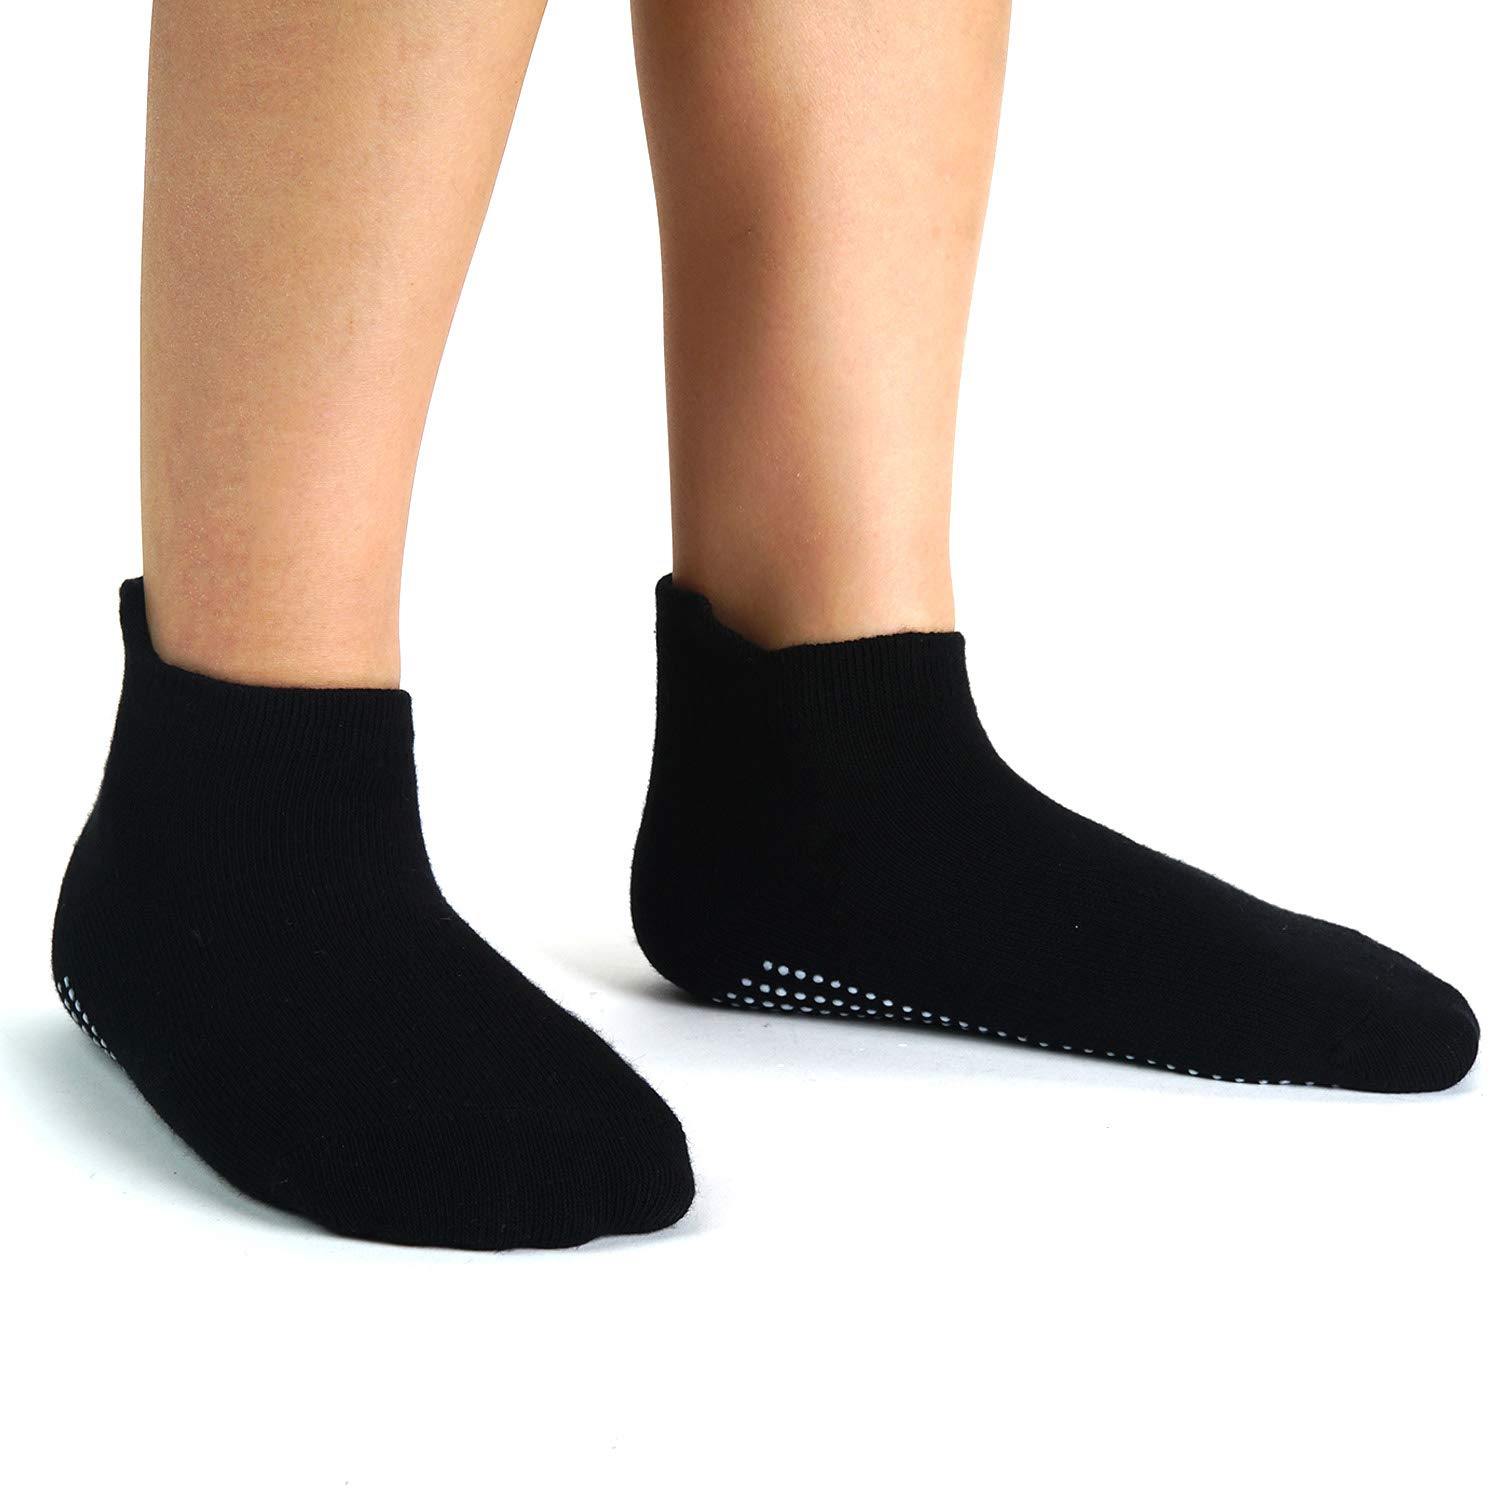 Aminson Anti Slip Non Skid Ankle Socks With Grips for Baby Toddler Kids Boys Girls